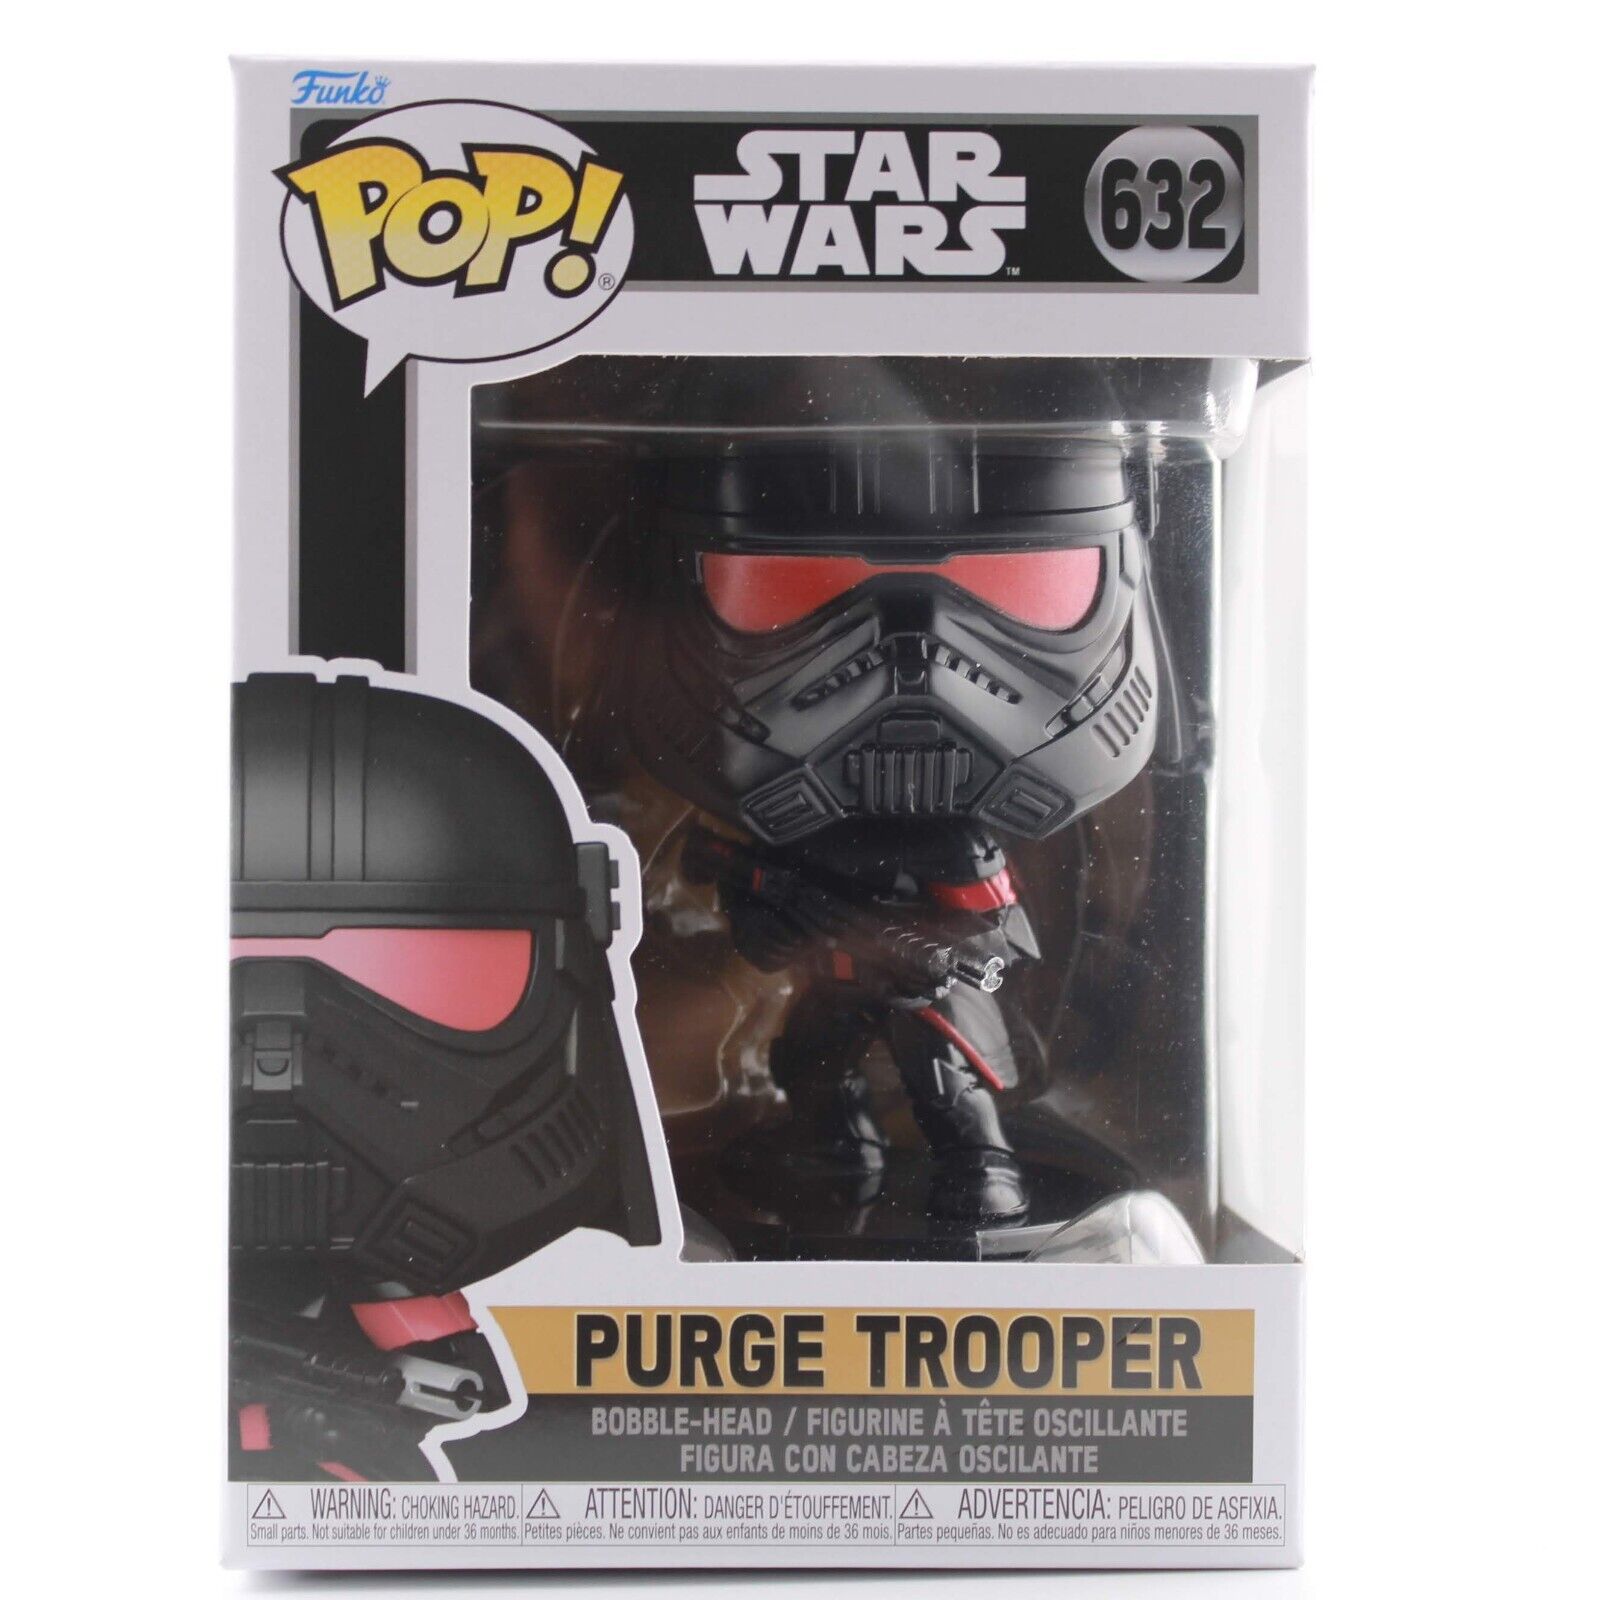 Obi-Wan - Purge Trooper vinyl figurine no. 632